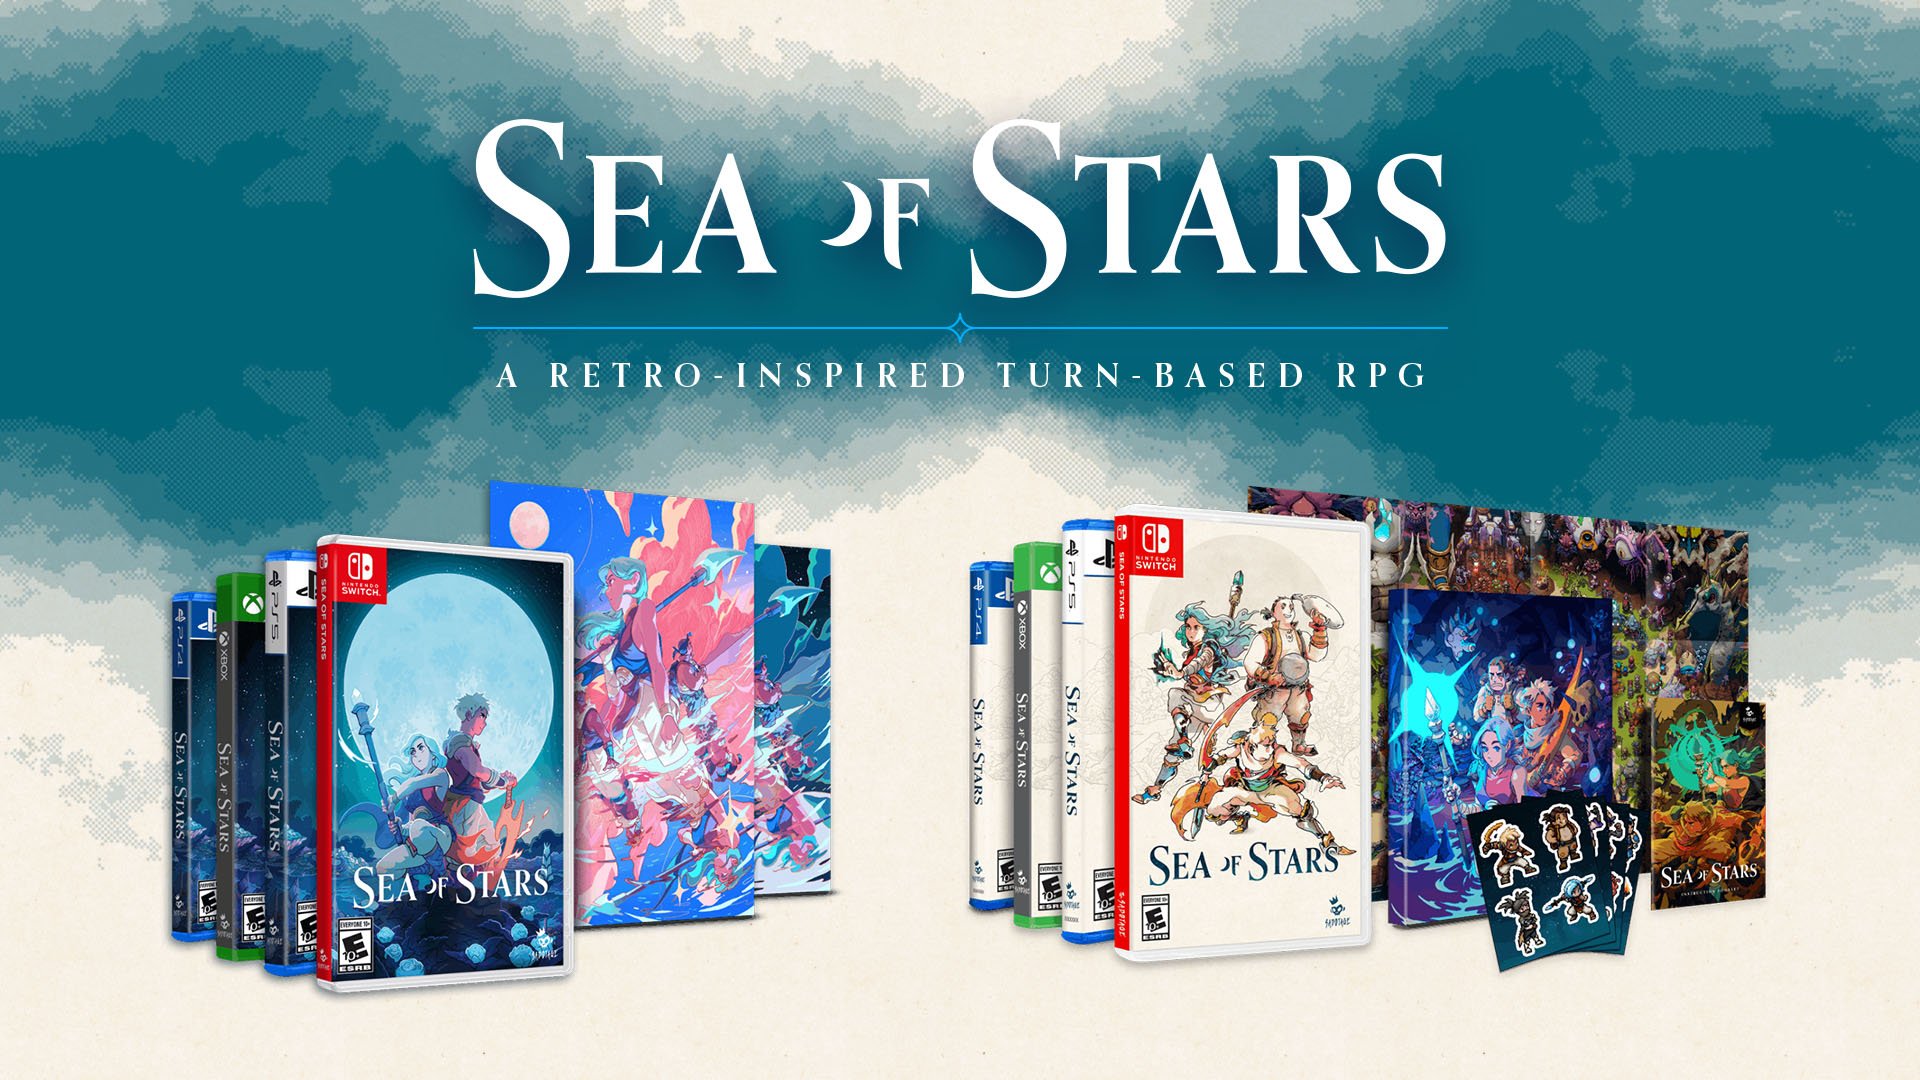  Sea of Stars - Standard - Nintendo Switch [Digital Code] :  Video Games